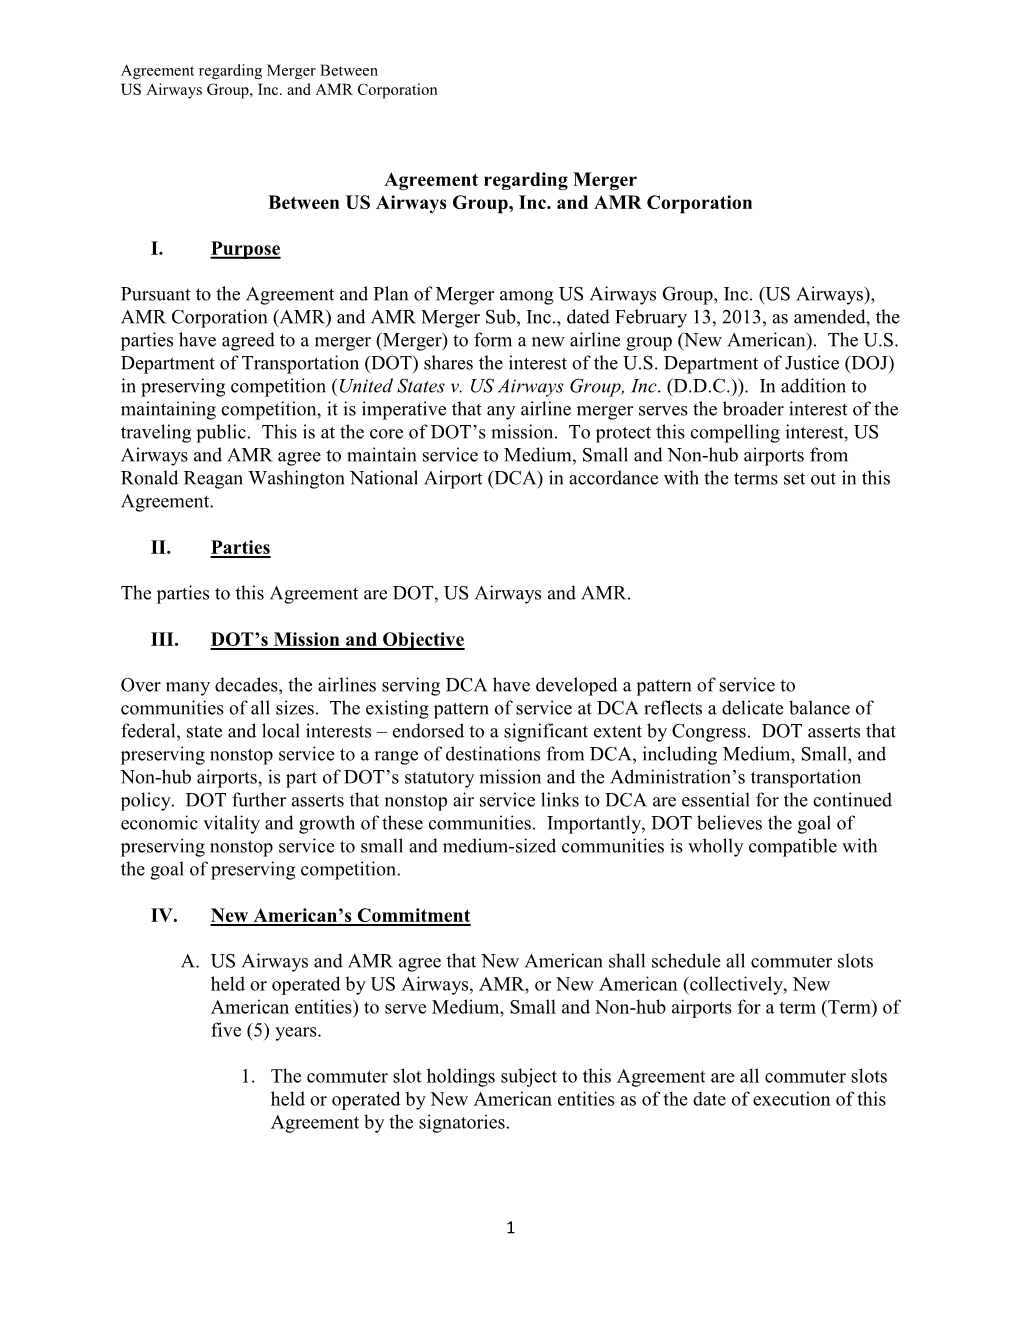 Agreement Regarding Merger Between US Airways Group, Inc. and AMR Corporation